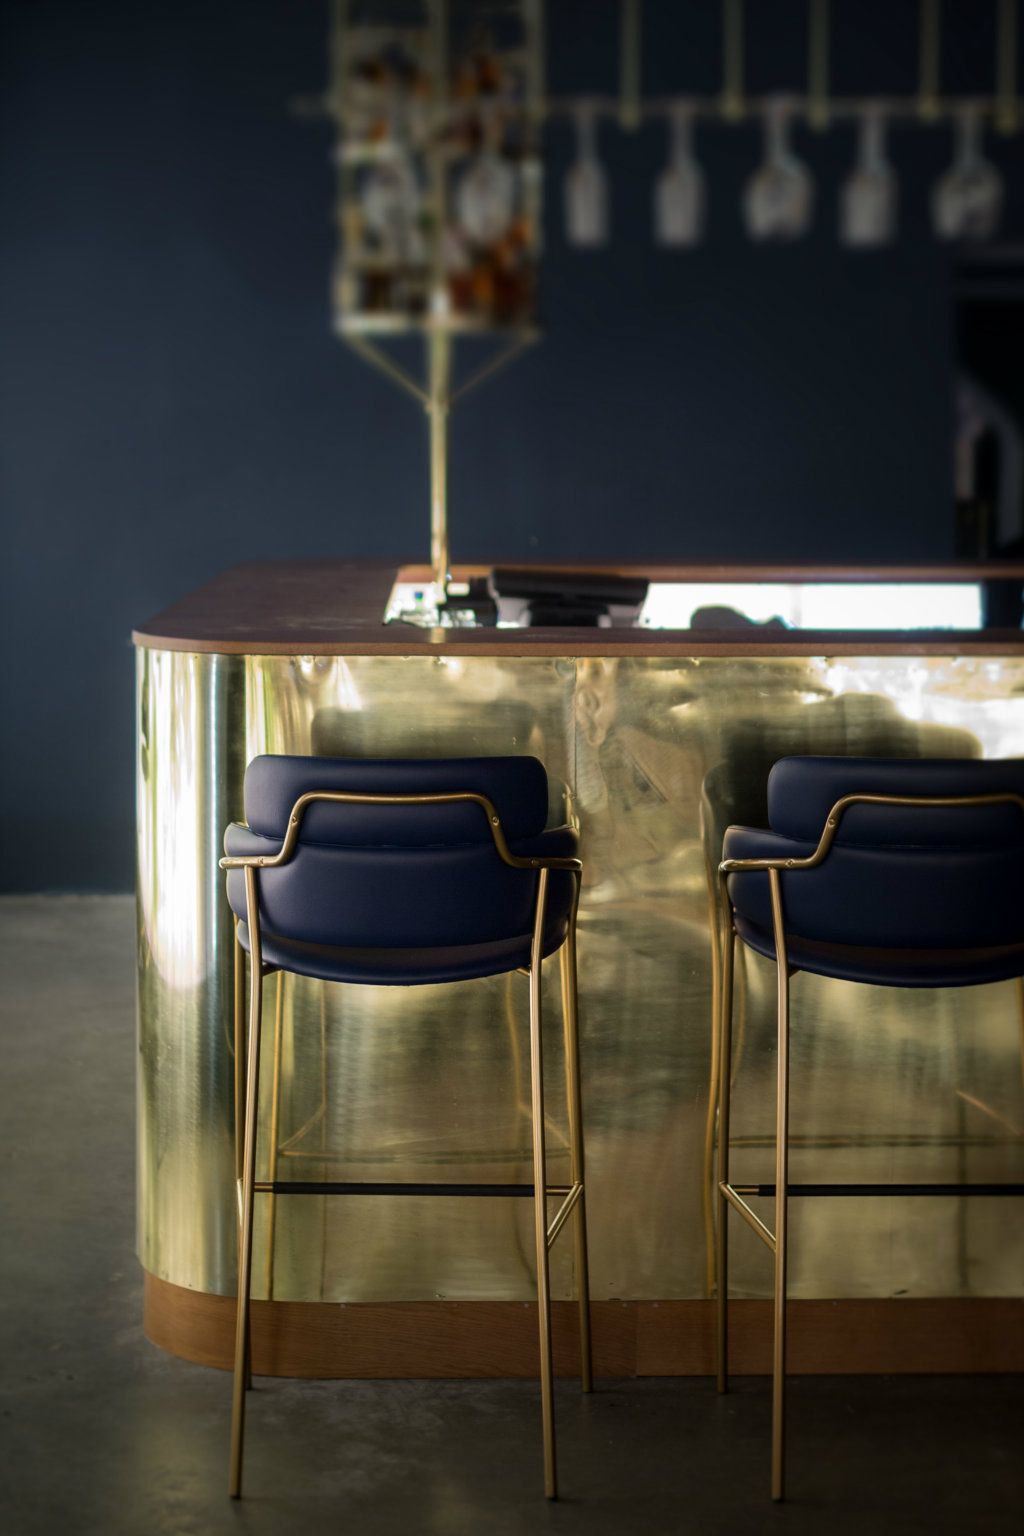 Kitchen metal stools - Navy blue bar chair